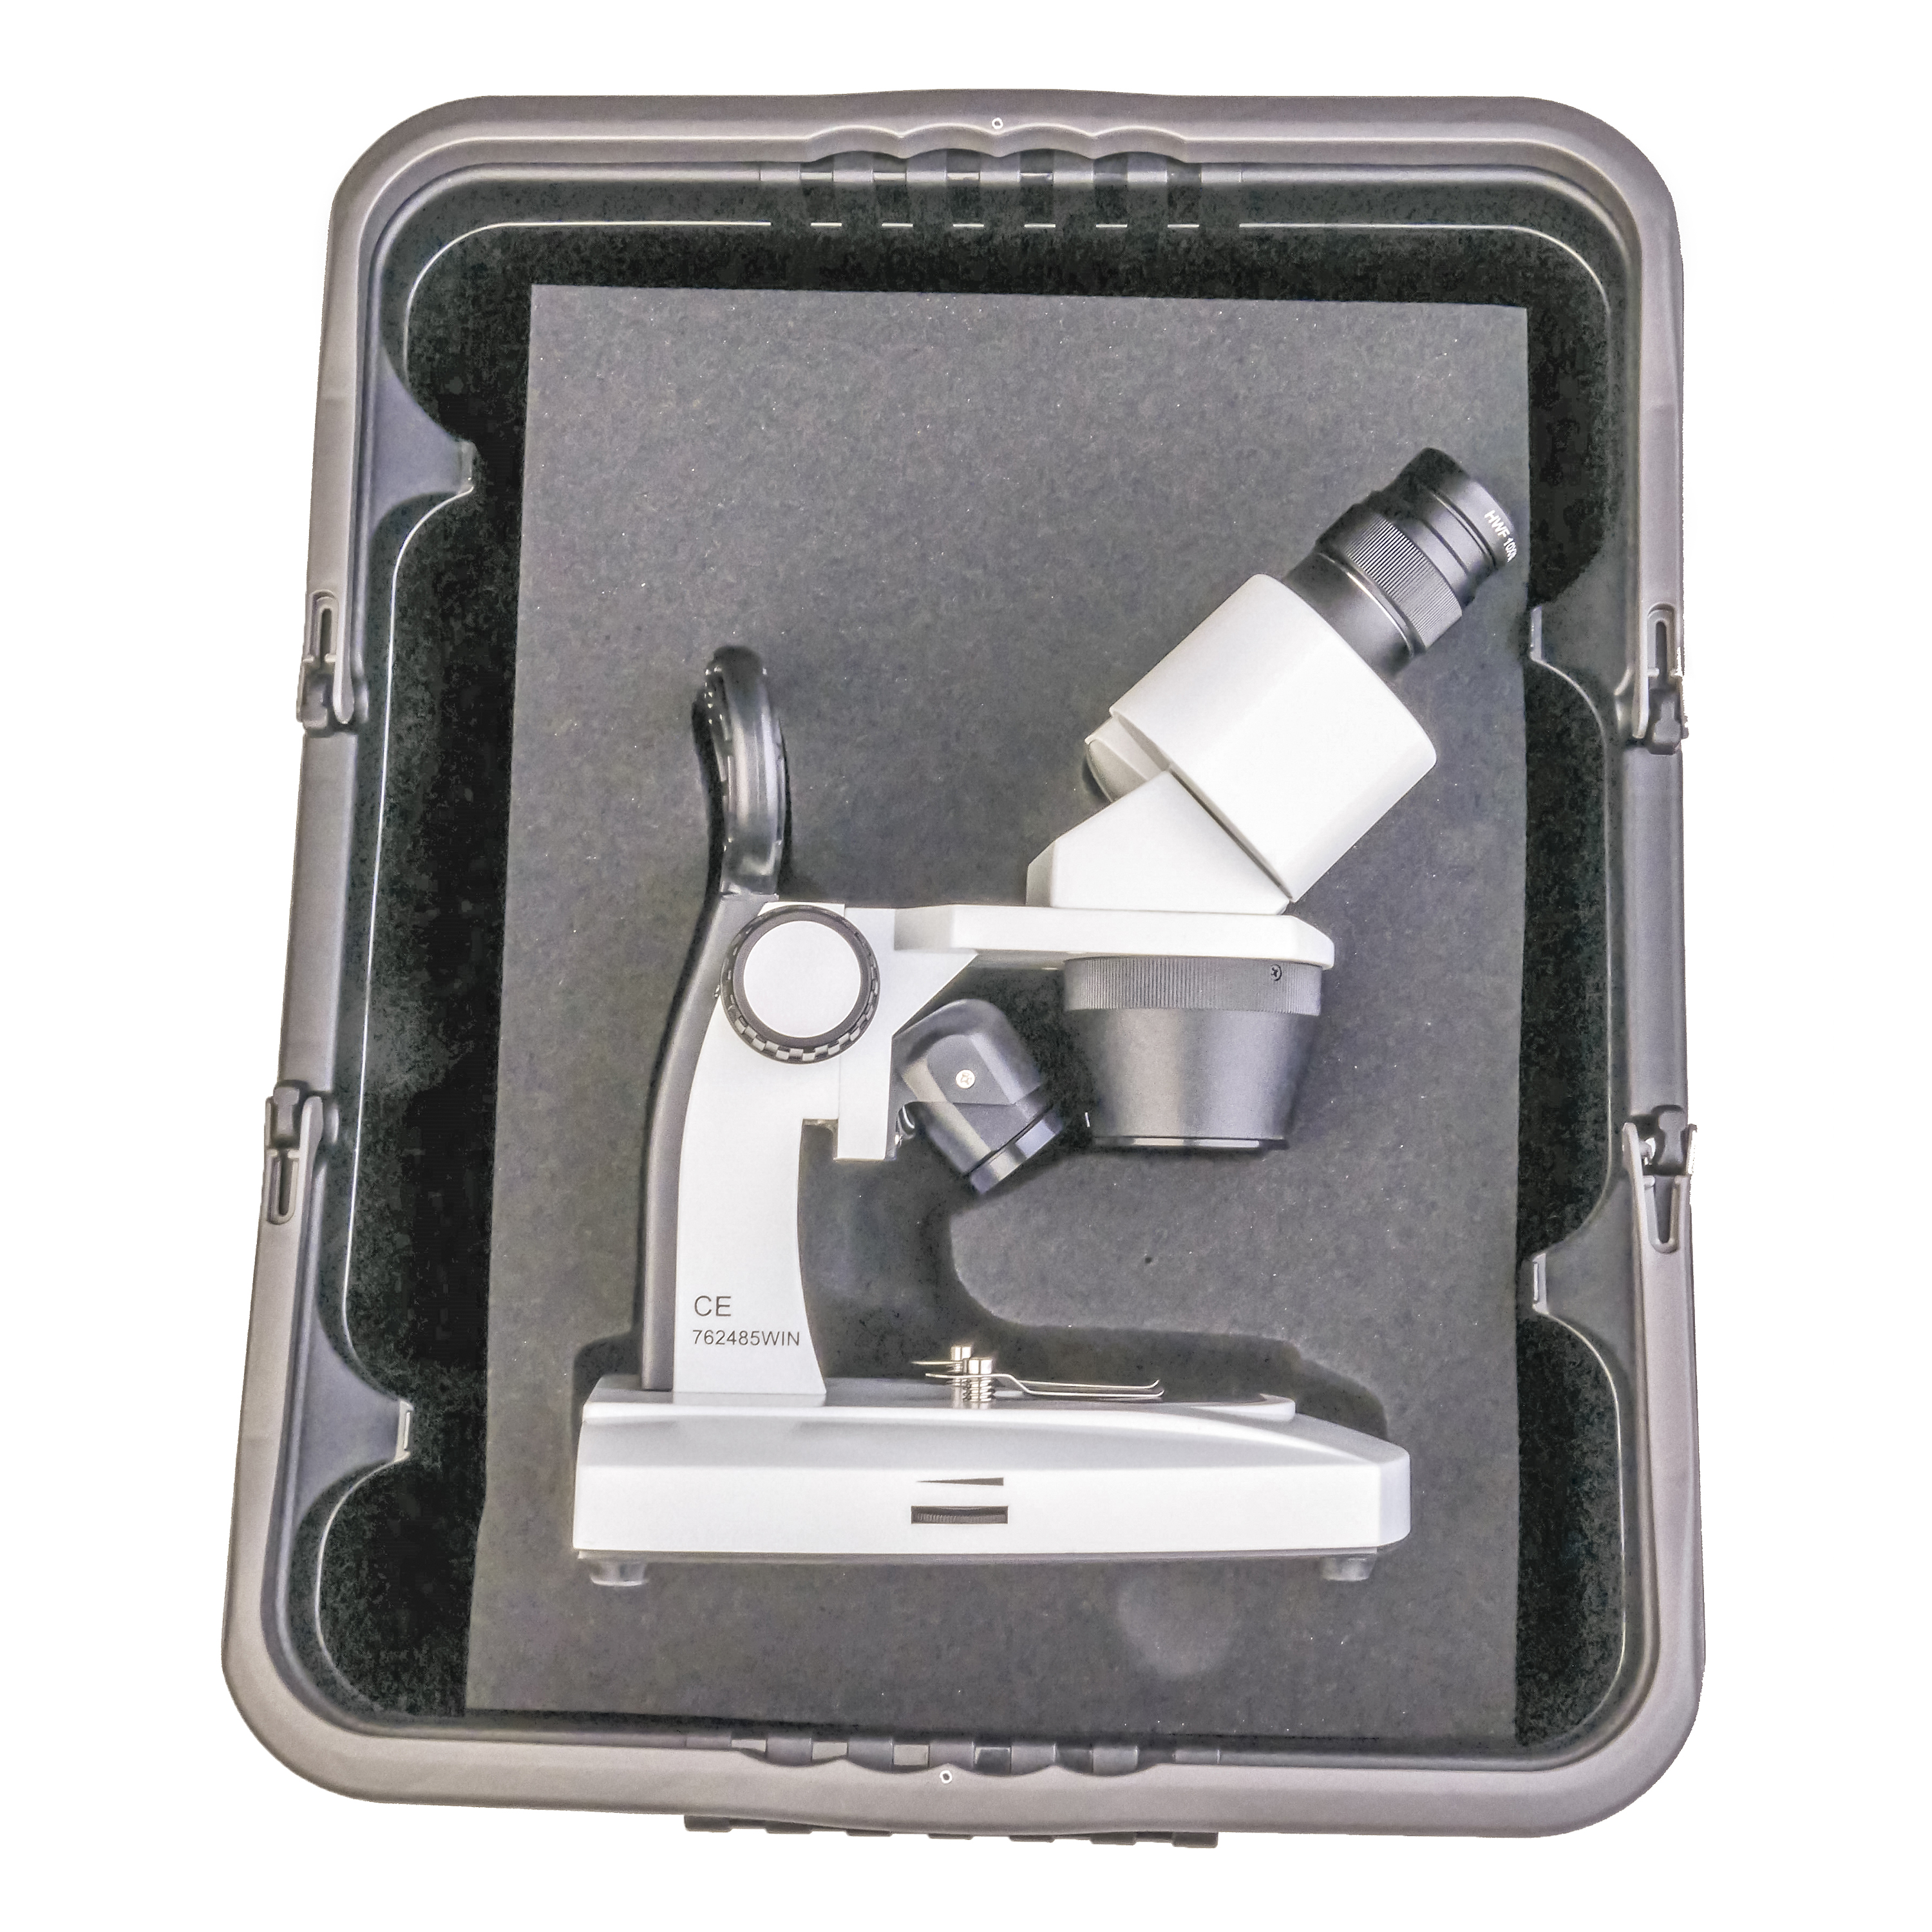 Stereo-Mikroskop HPS 2032 mit Akkus, im Experimentier-Koffer